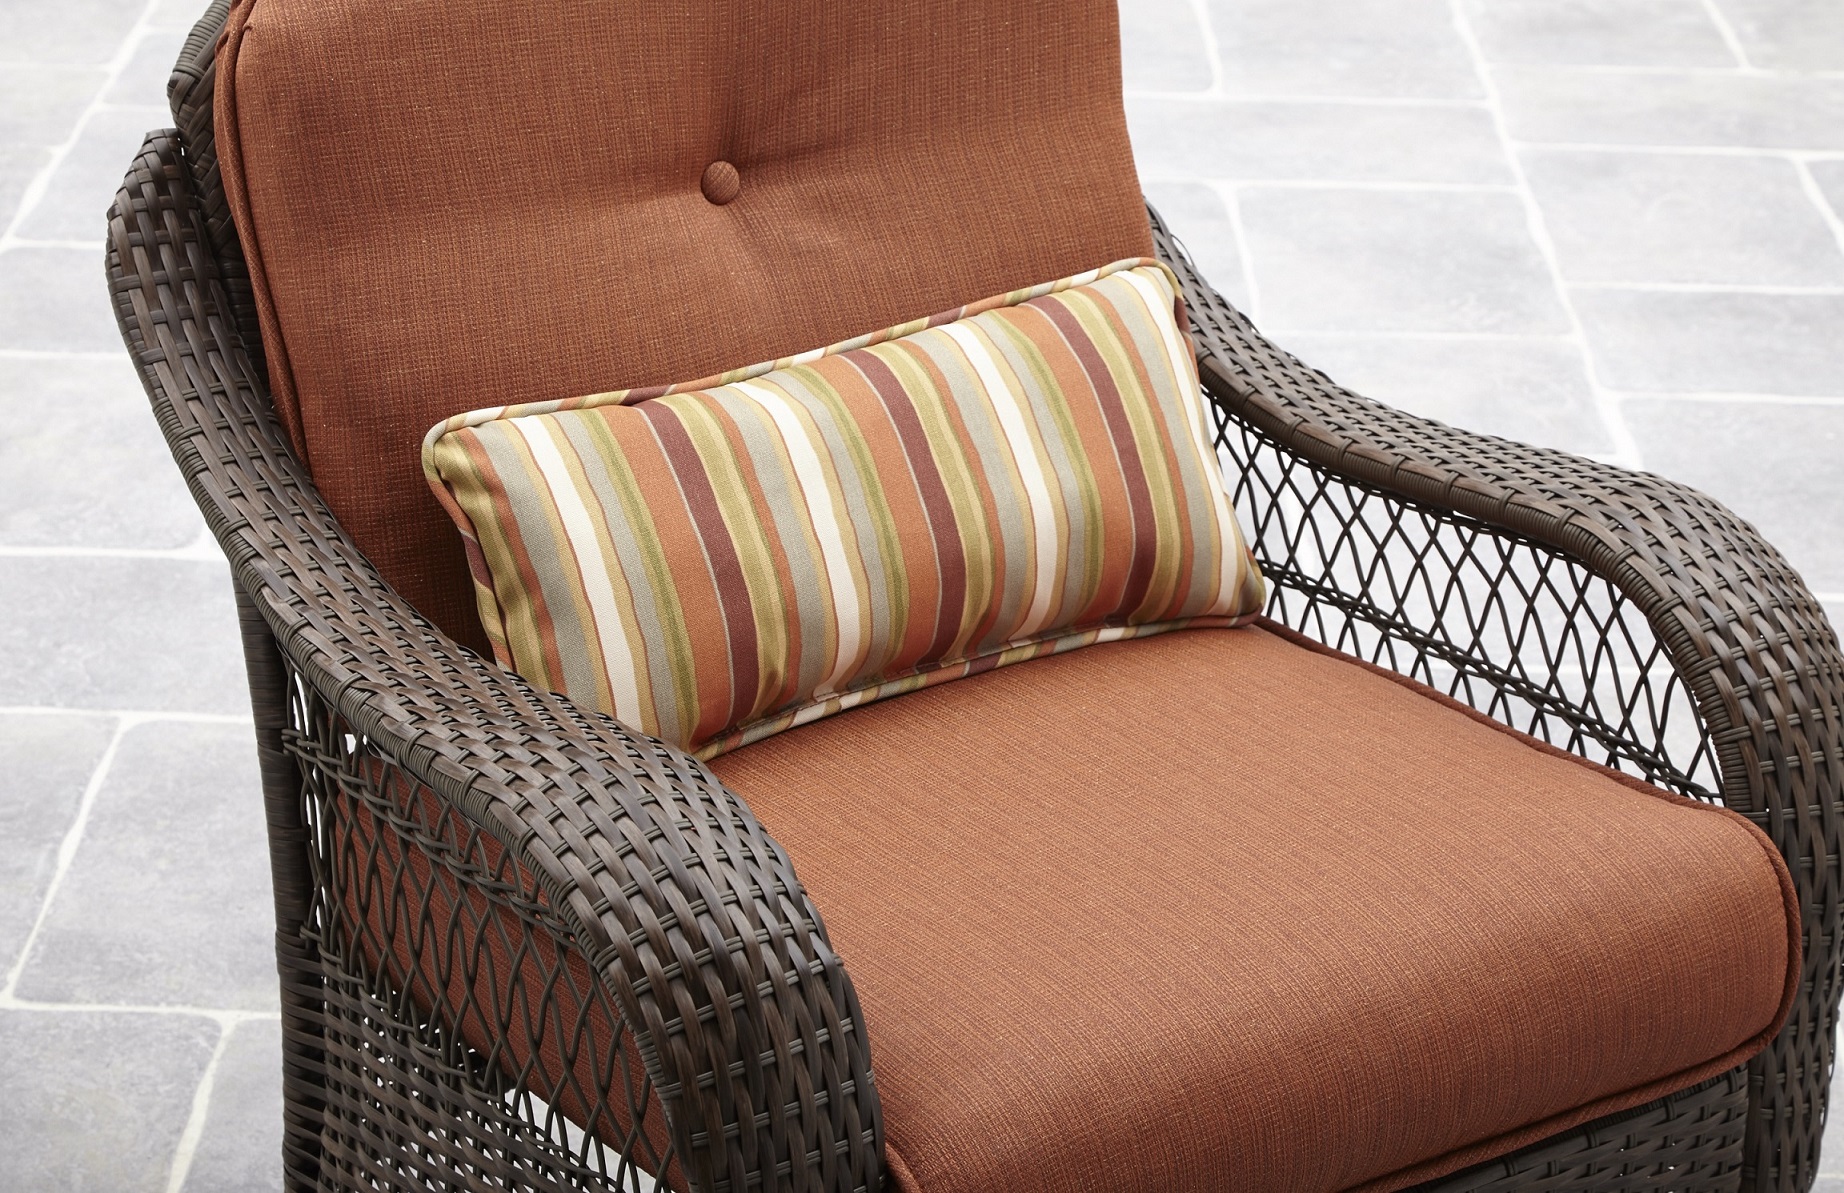 Better Homes & Gardens Azalea Ridge Outdoor Conversation Set with Orange Cushions - image 3 of 13